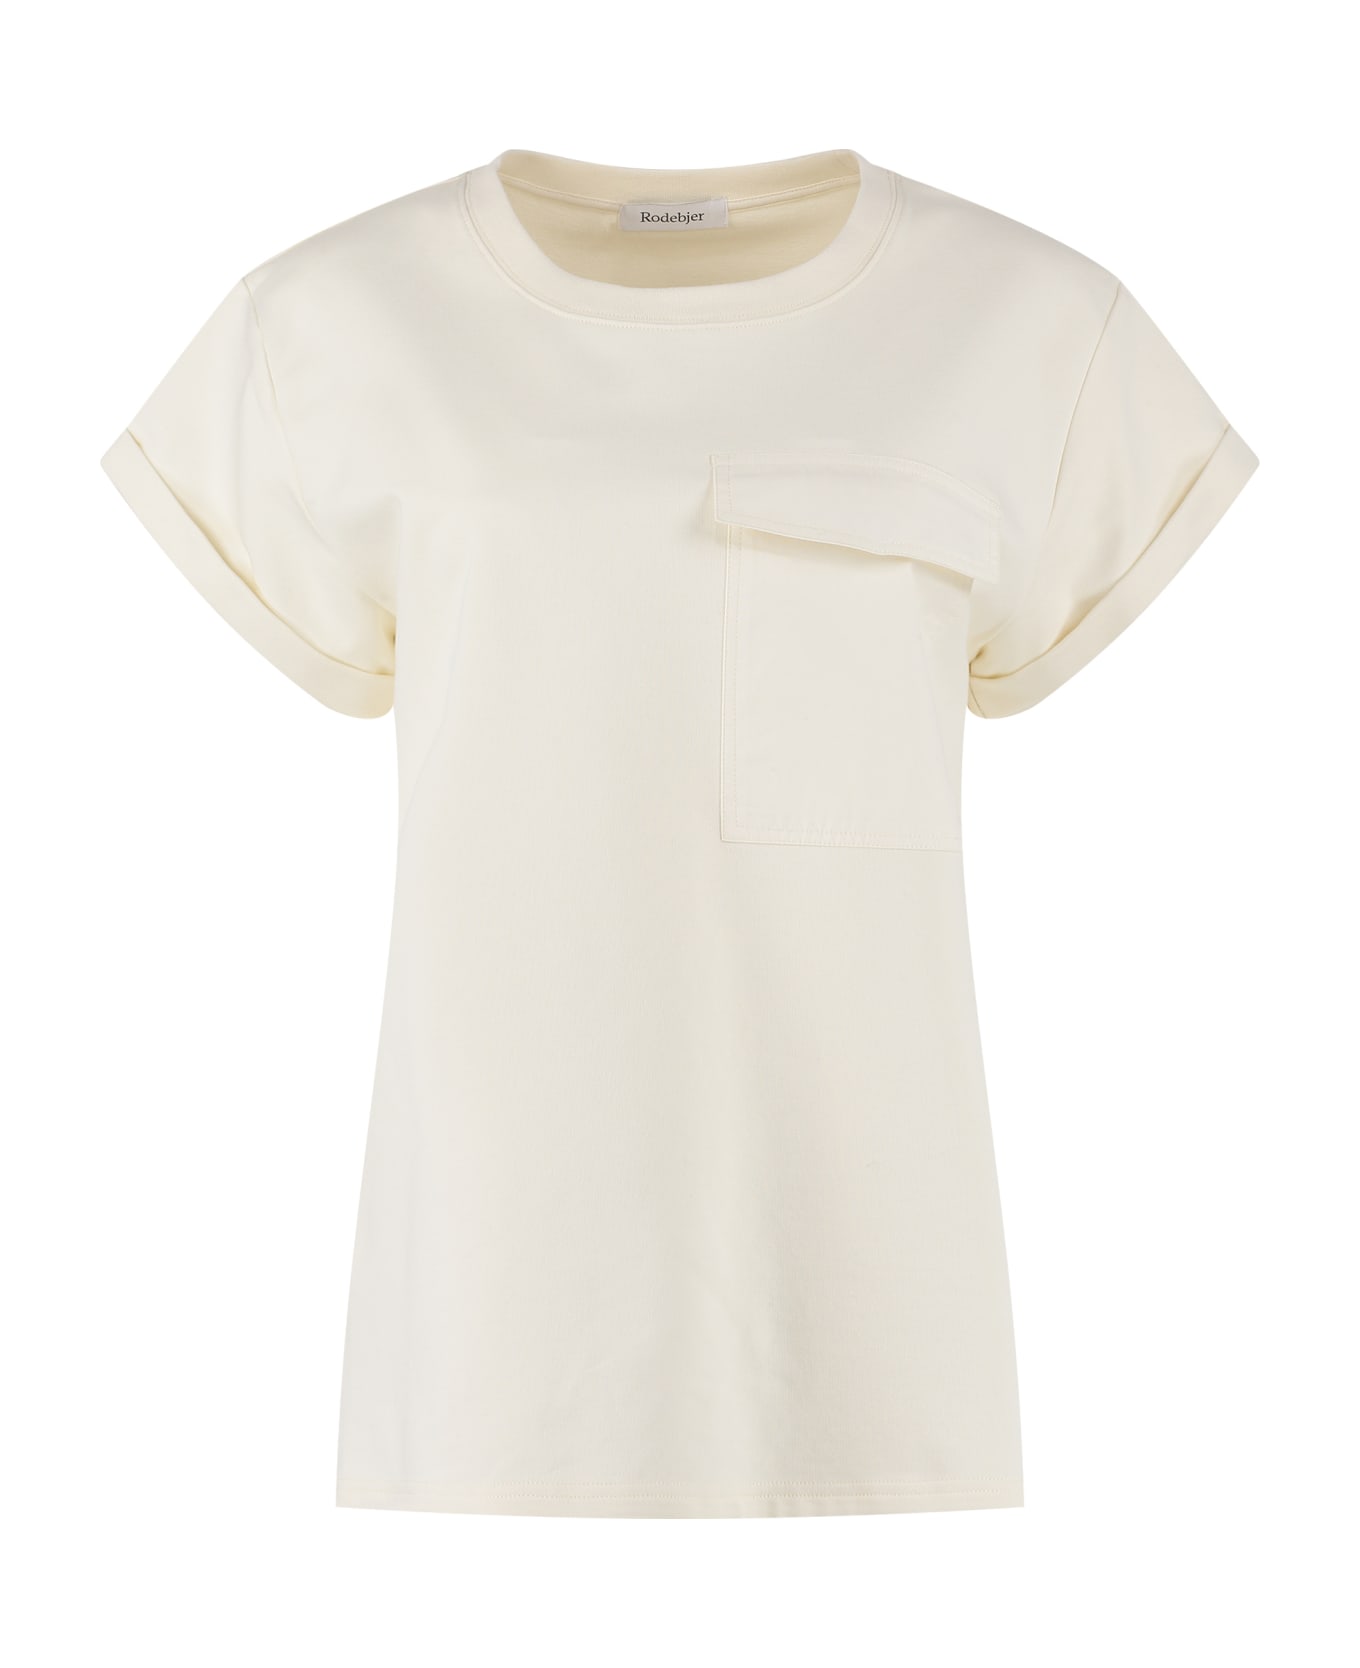 Rodebjer Nora Cotton T-shirt - panna Tシャツ